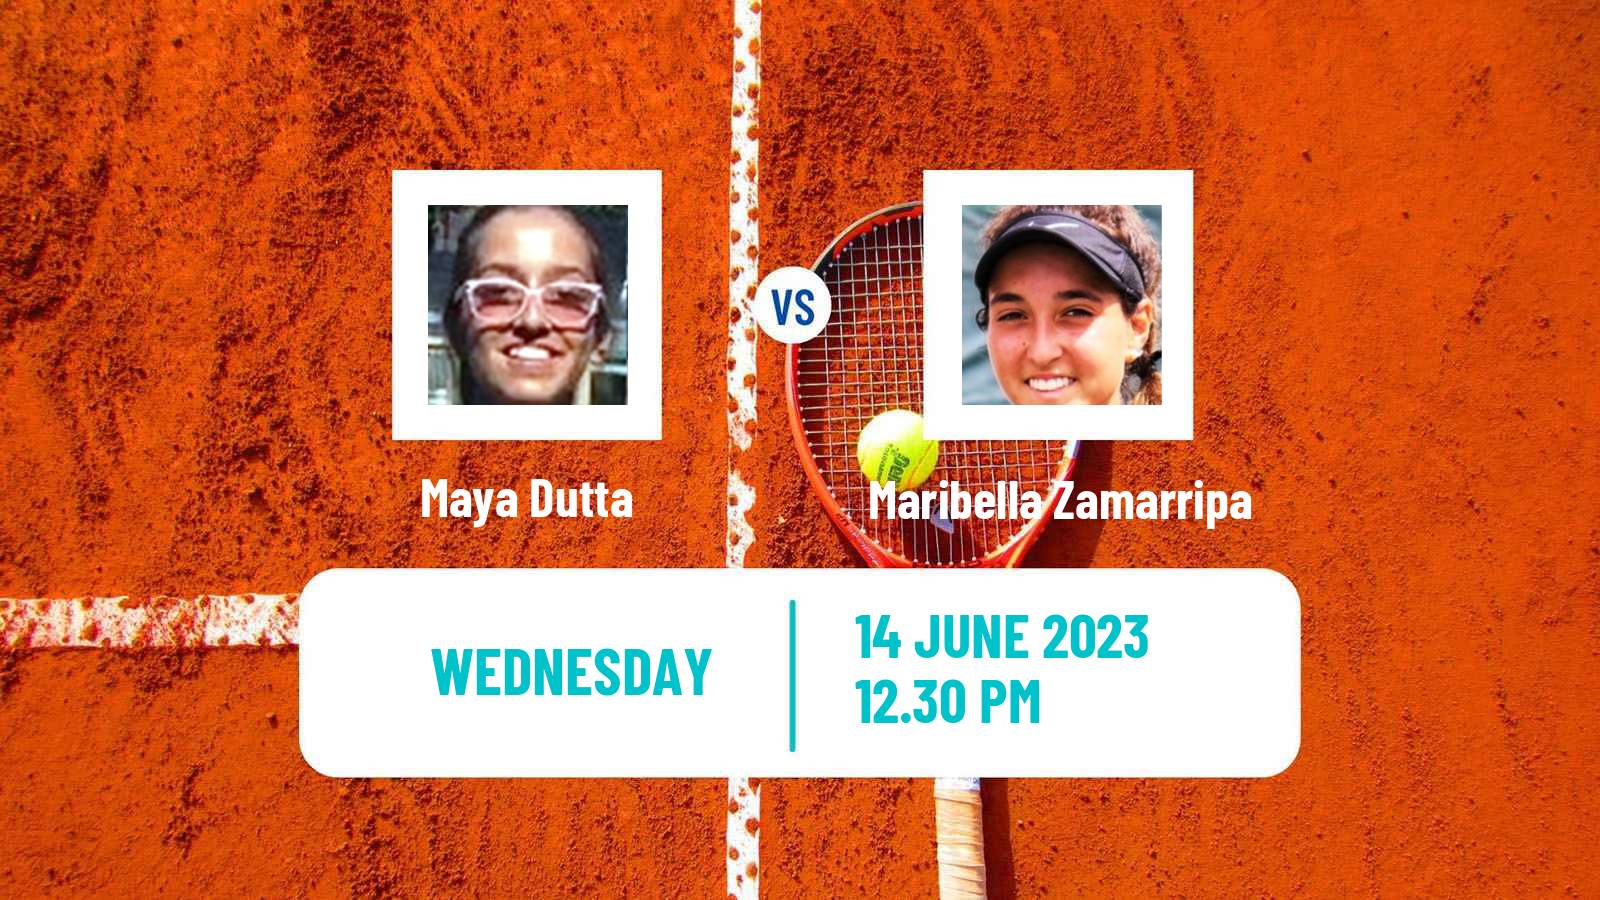 Tennis ITF W25 Colorado Springs Women Maya Dutta - Maribella Zamarripa